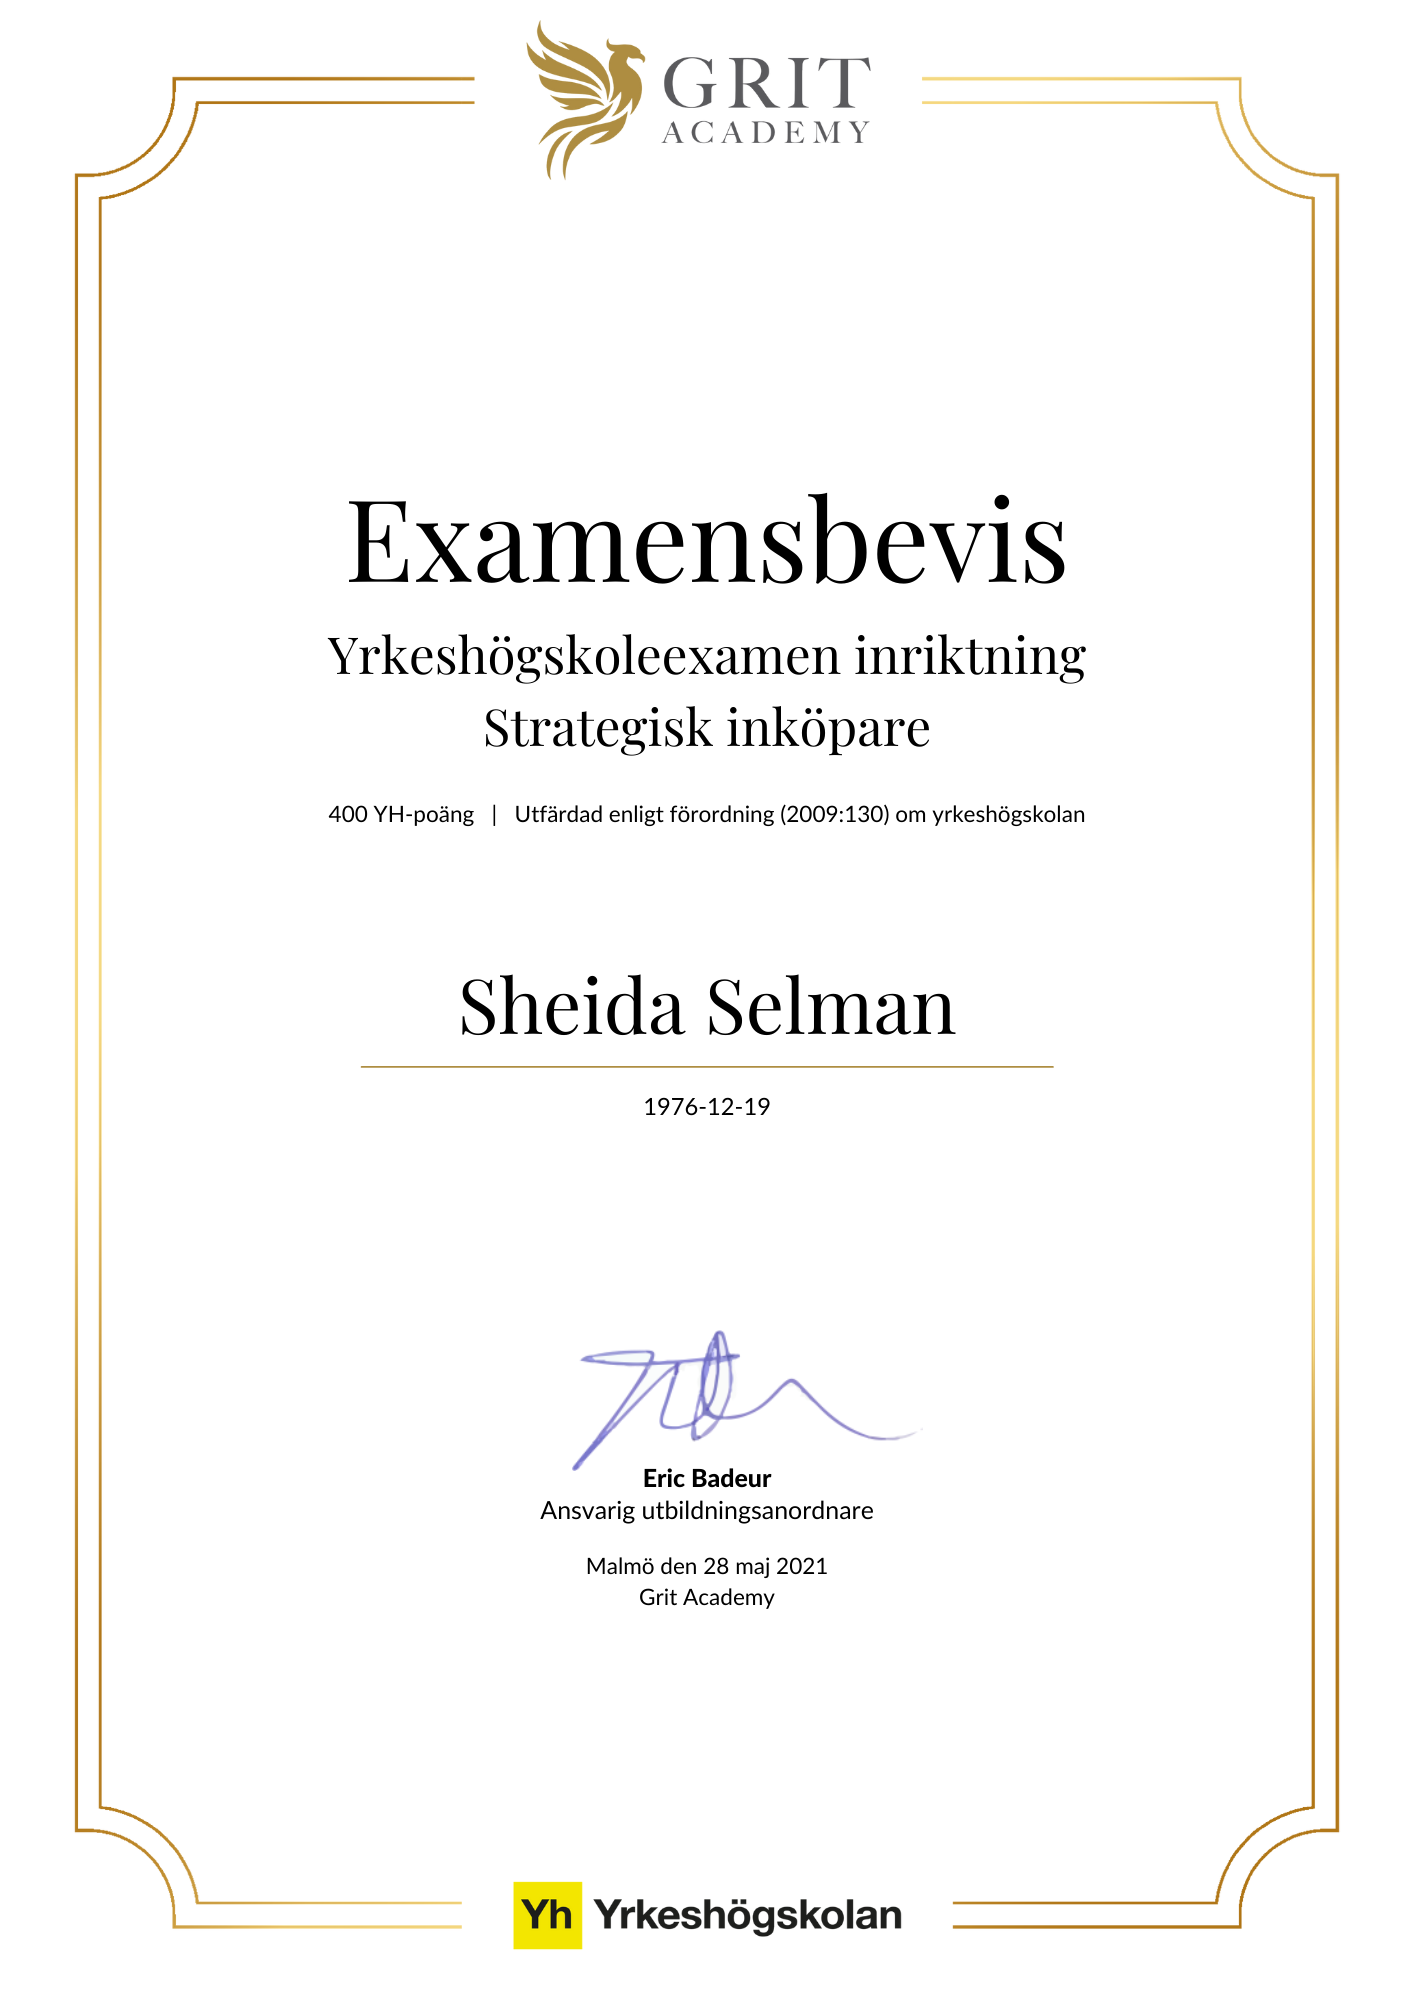 Examensbevis Sheida Selman - 1